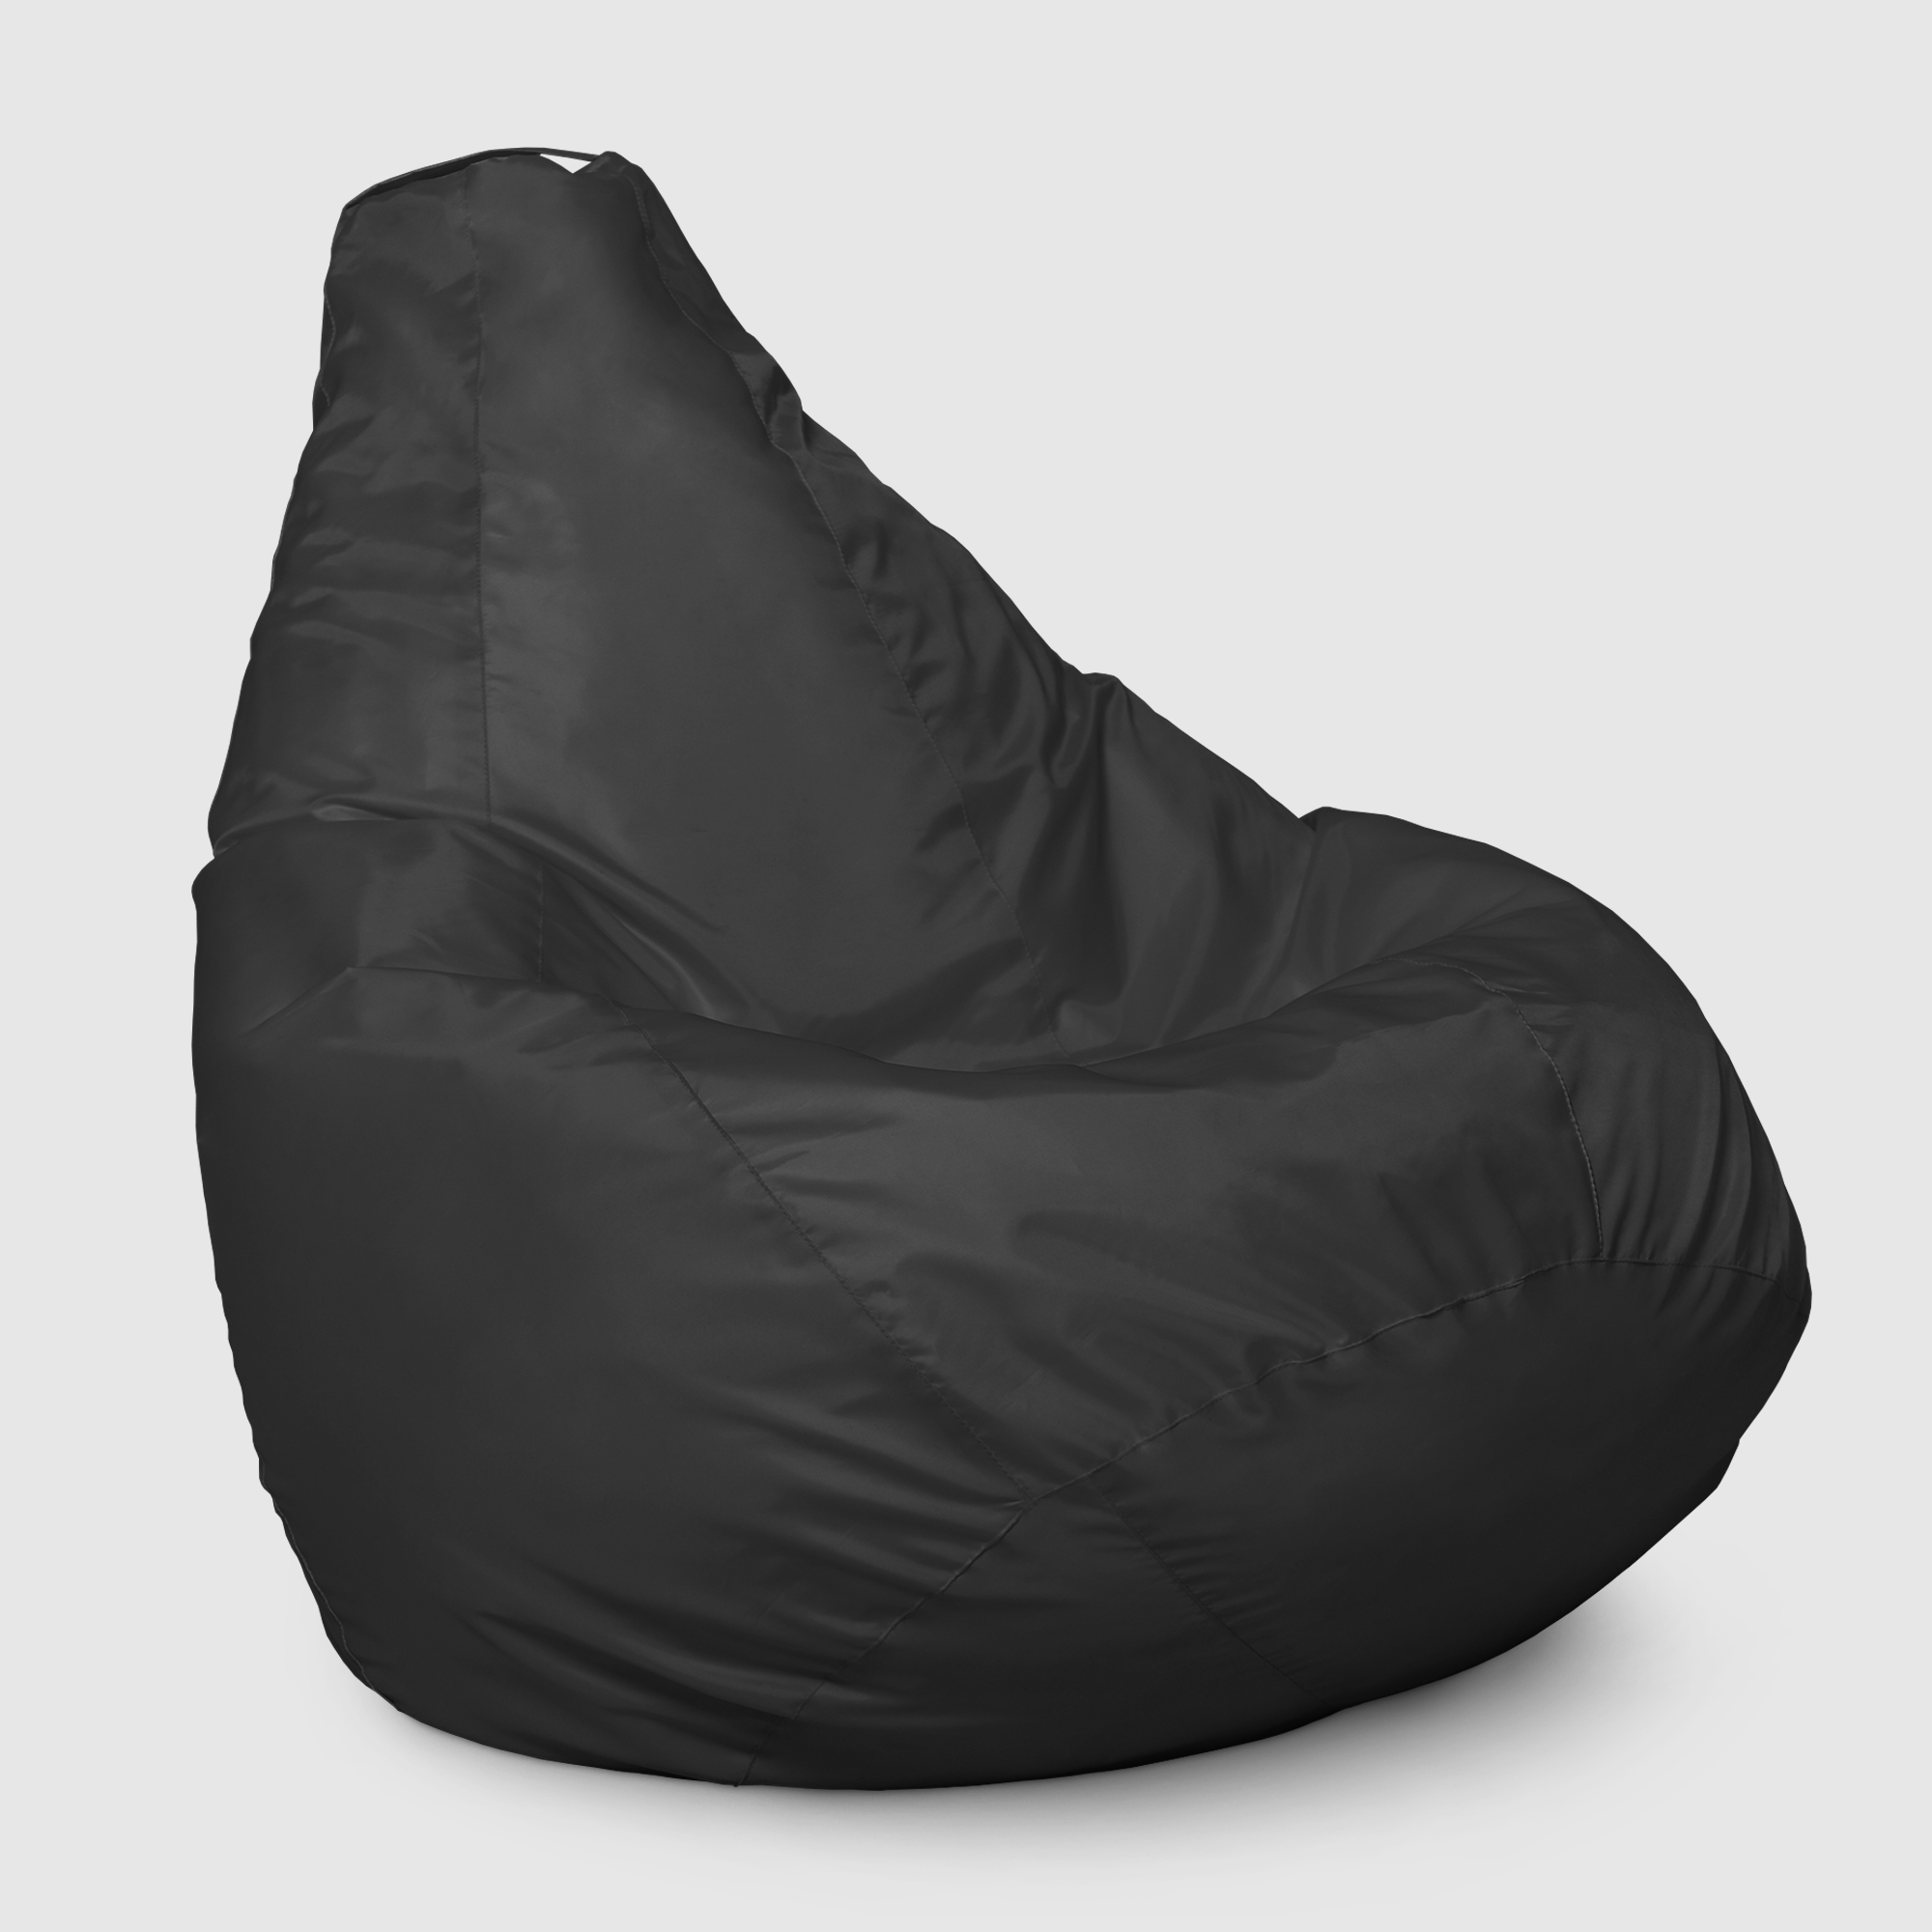 Кресло мешок Dreambag Меган xl черное 85х85х125 см кресло мешок dreambag меган xl розовое 85х85х125см